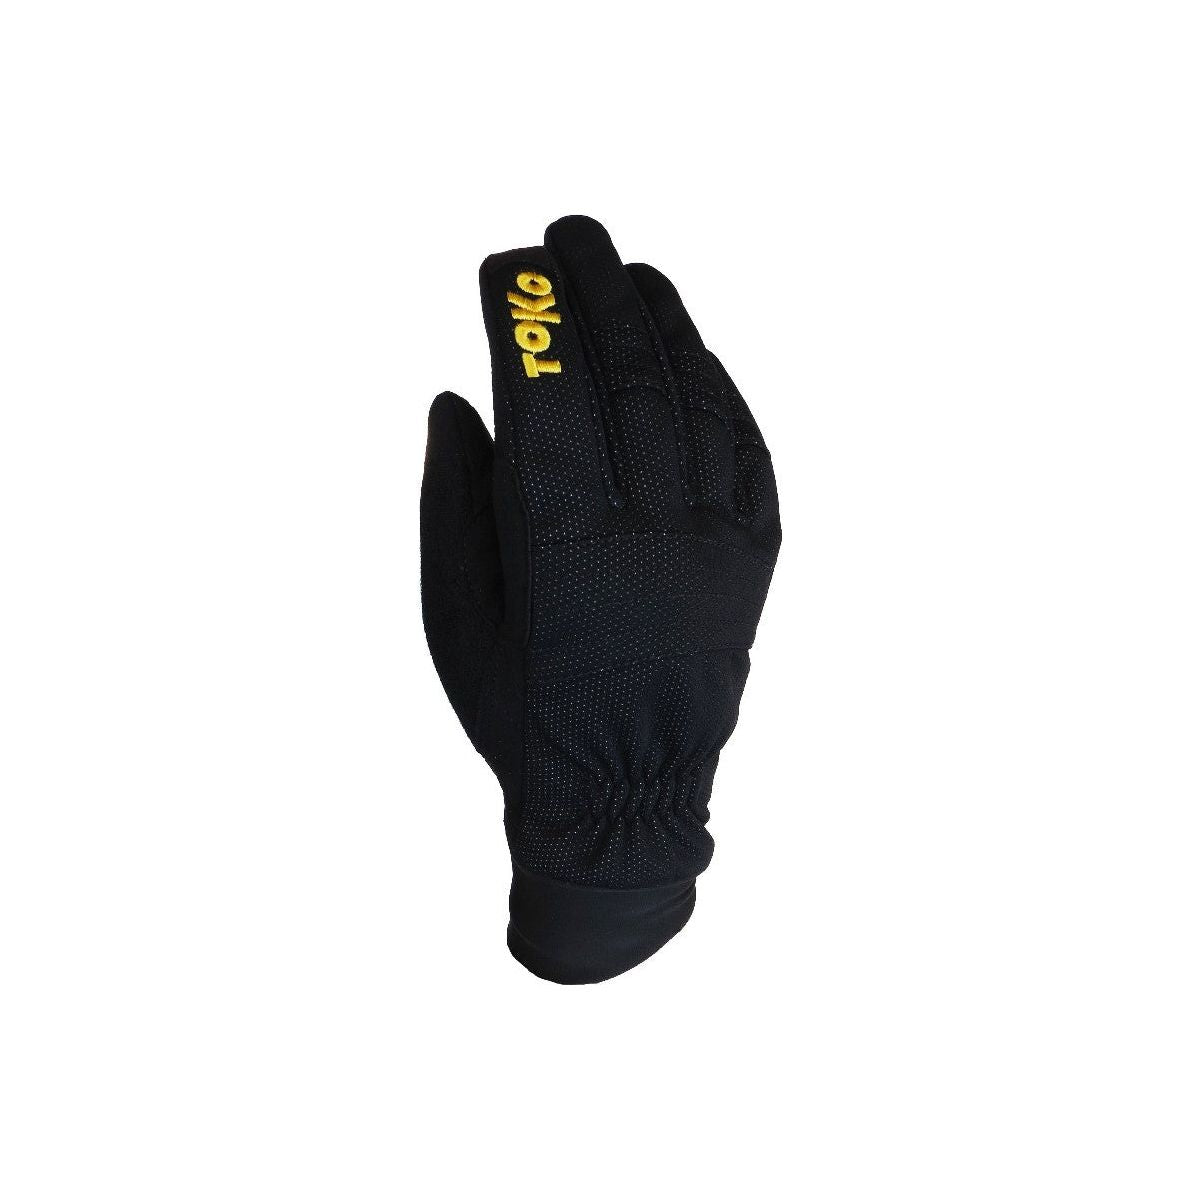 Toko Thermo Race Glove